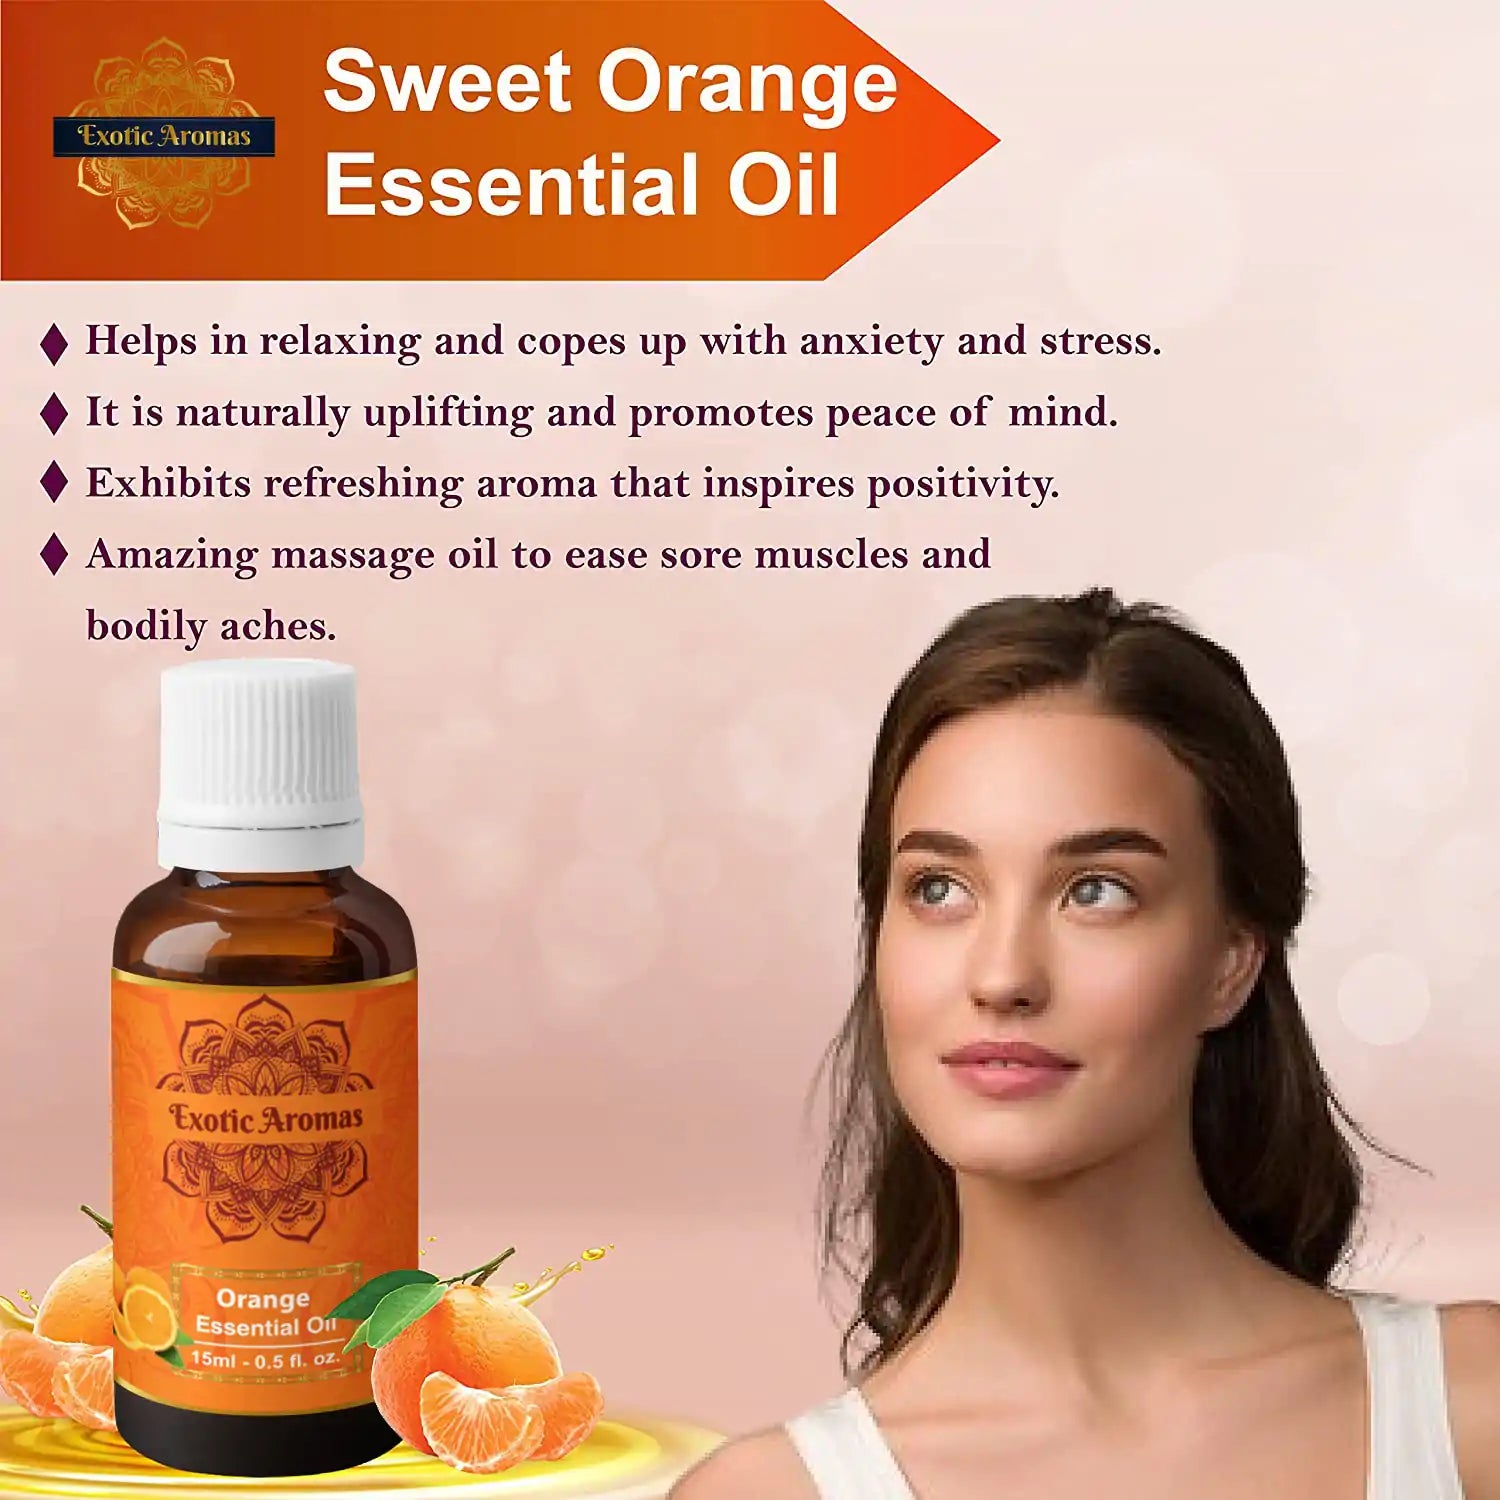 Girlishh on X: Amazing Benefits of Orange Essential Oil #essentialoil  #health #wellbeing  / X